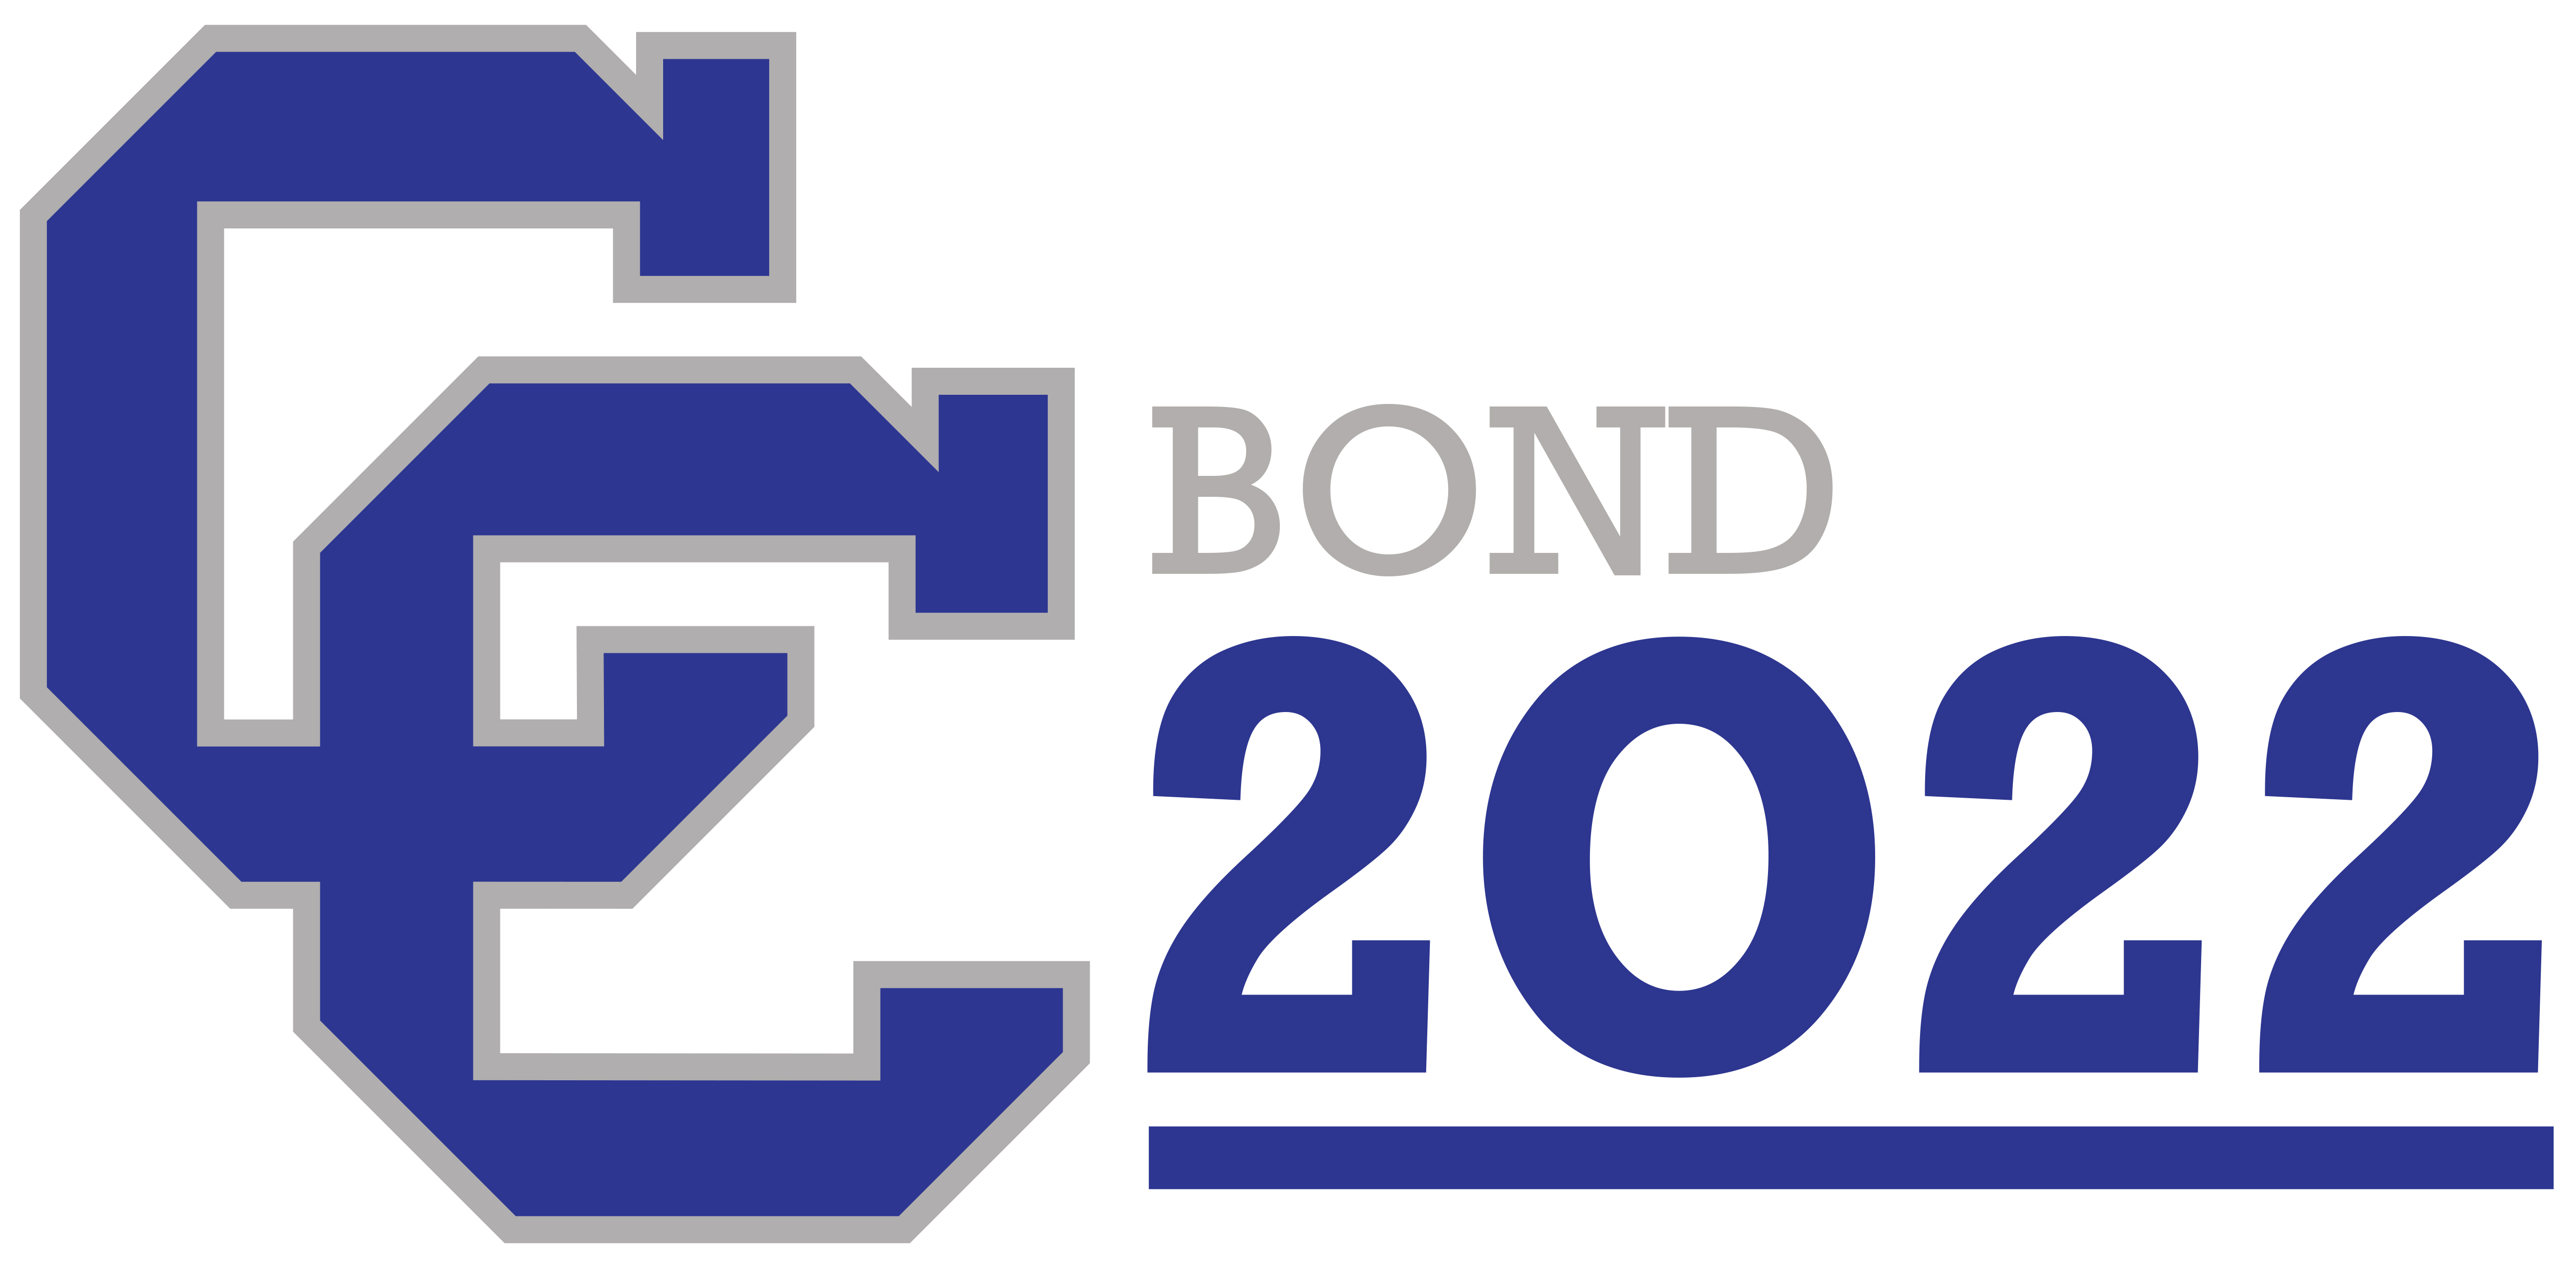 Bond 2021 logo